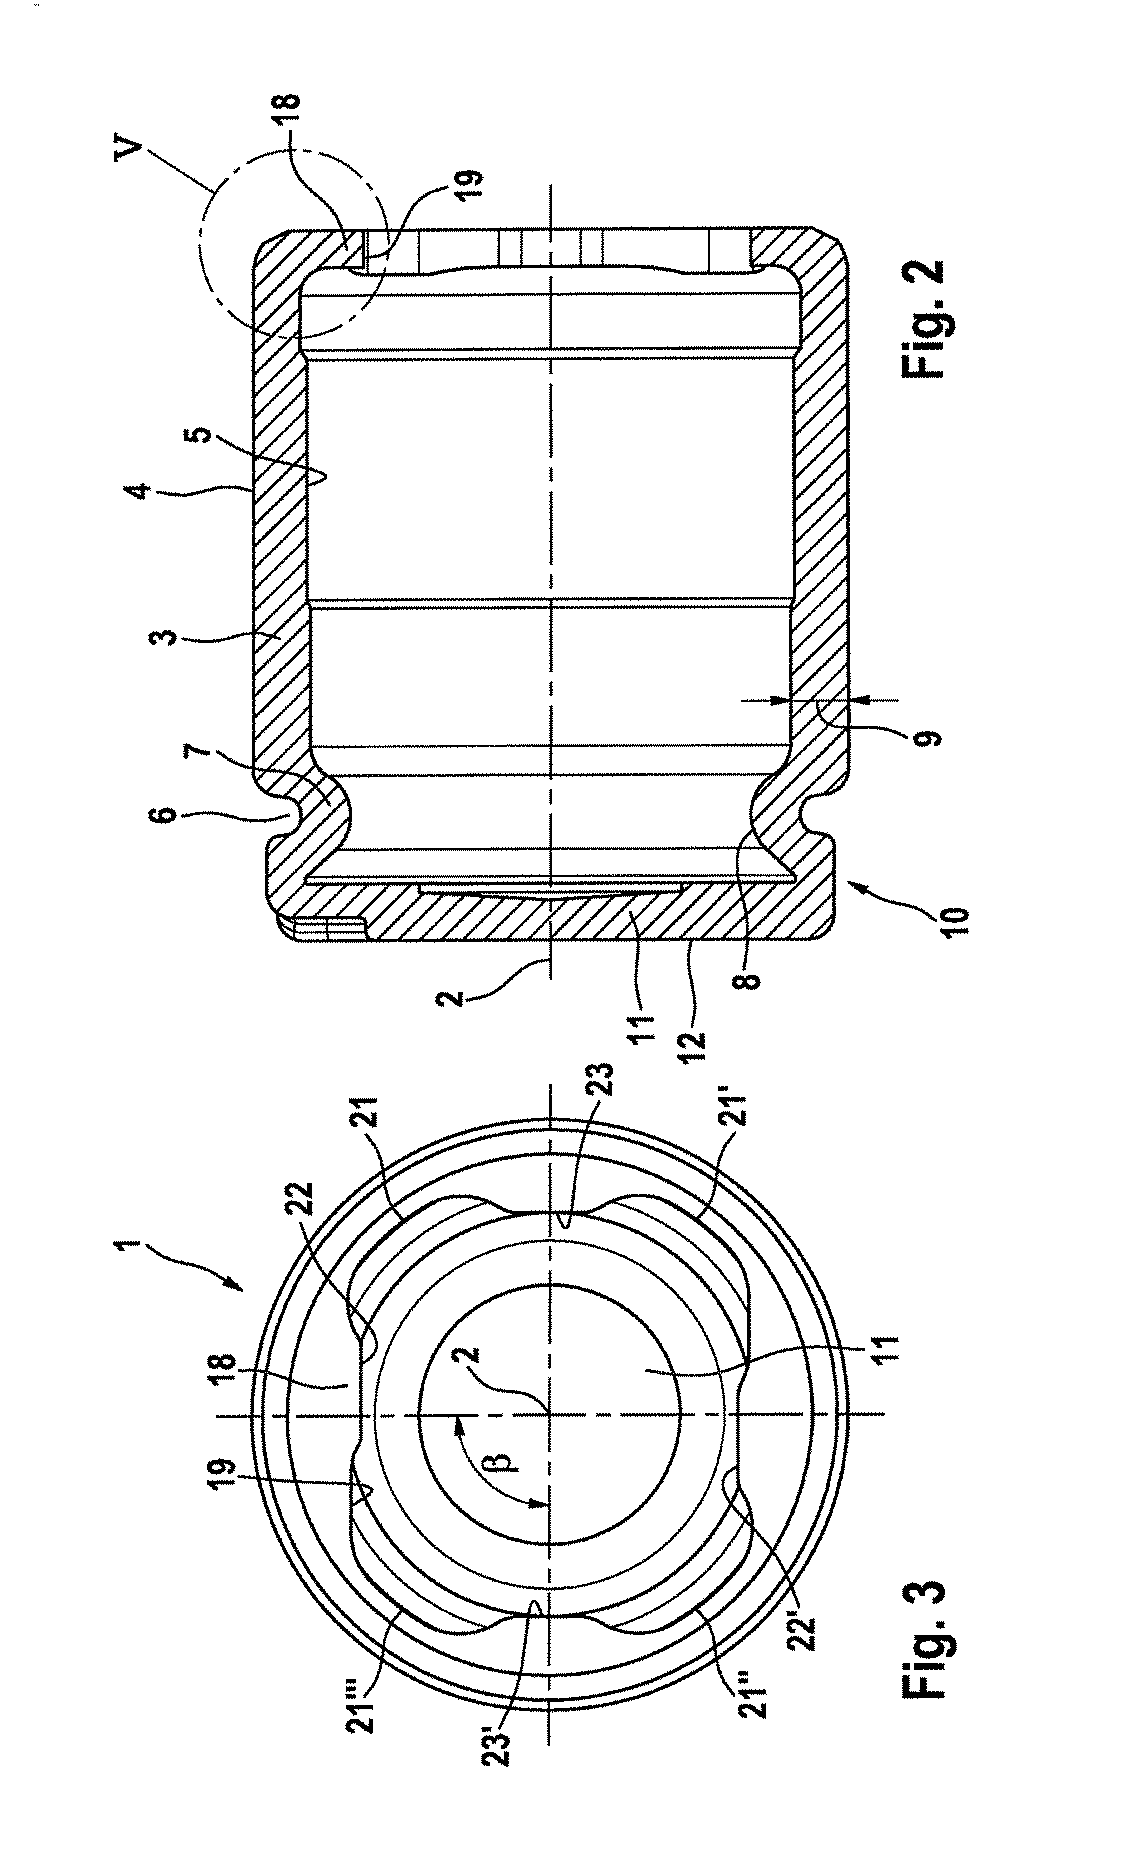 Piston for a brake caliper of a disk brake